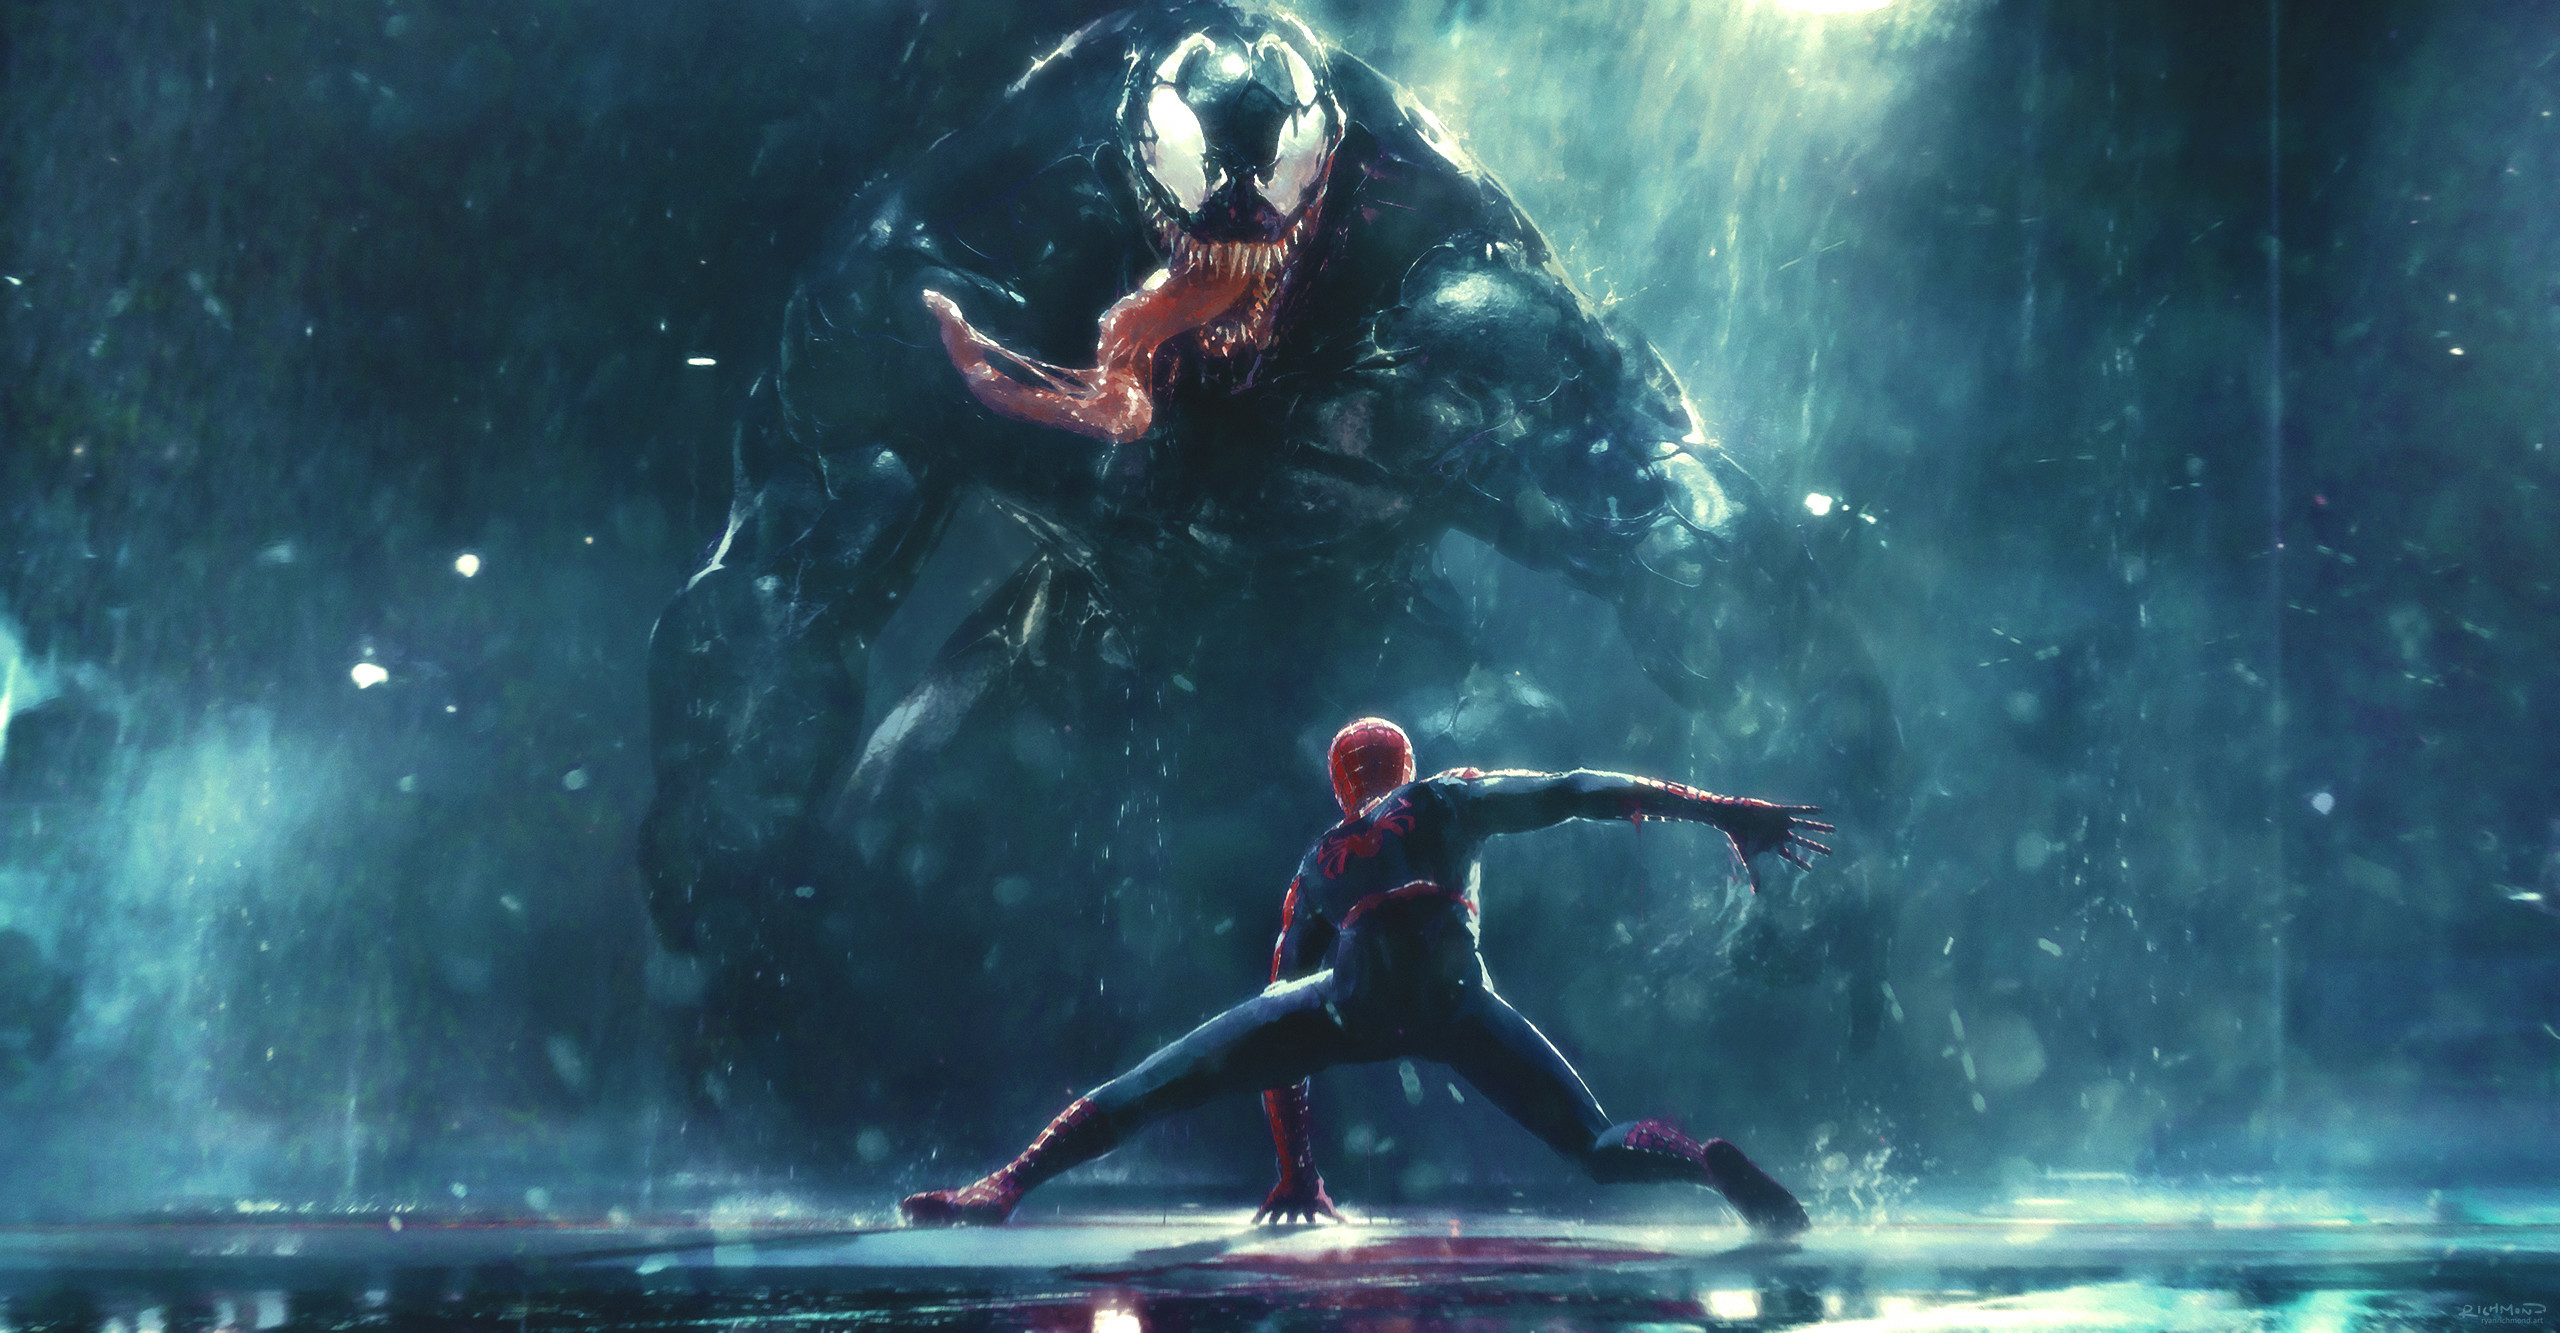 Venom x Spiderman Digital Art 2022 Wallpaper, HD Superheroes 4K Wallpapers,  Images, Photos and Background - Wallpapers Den